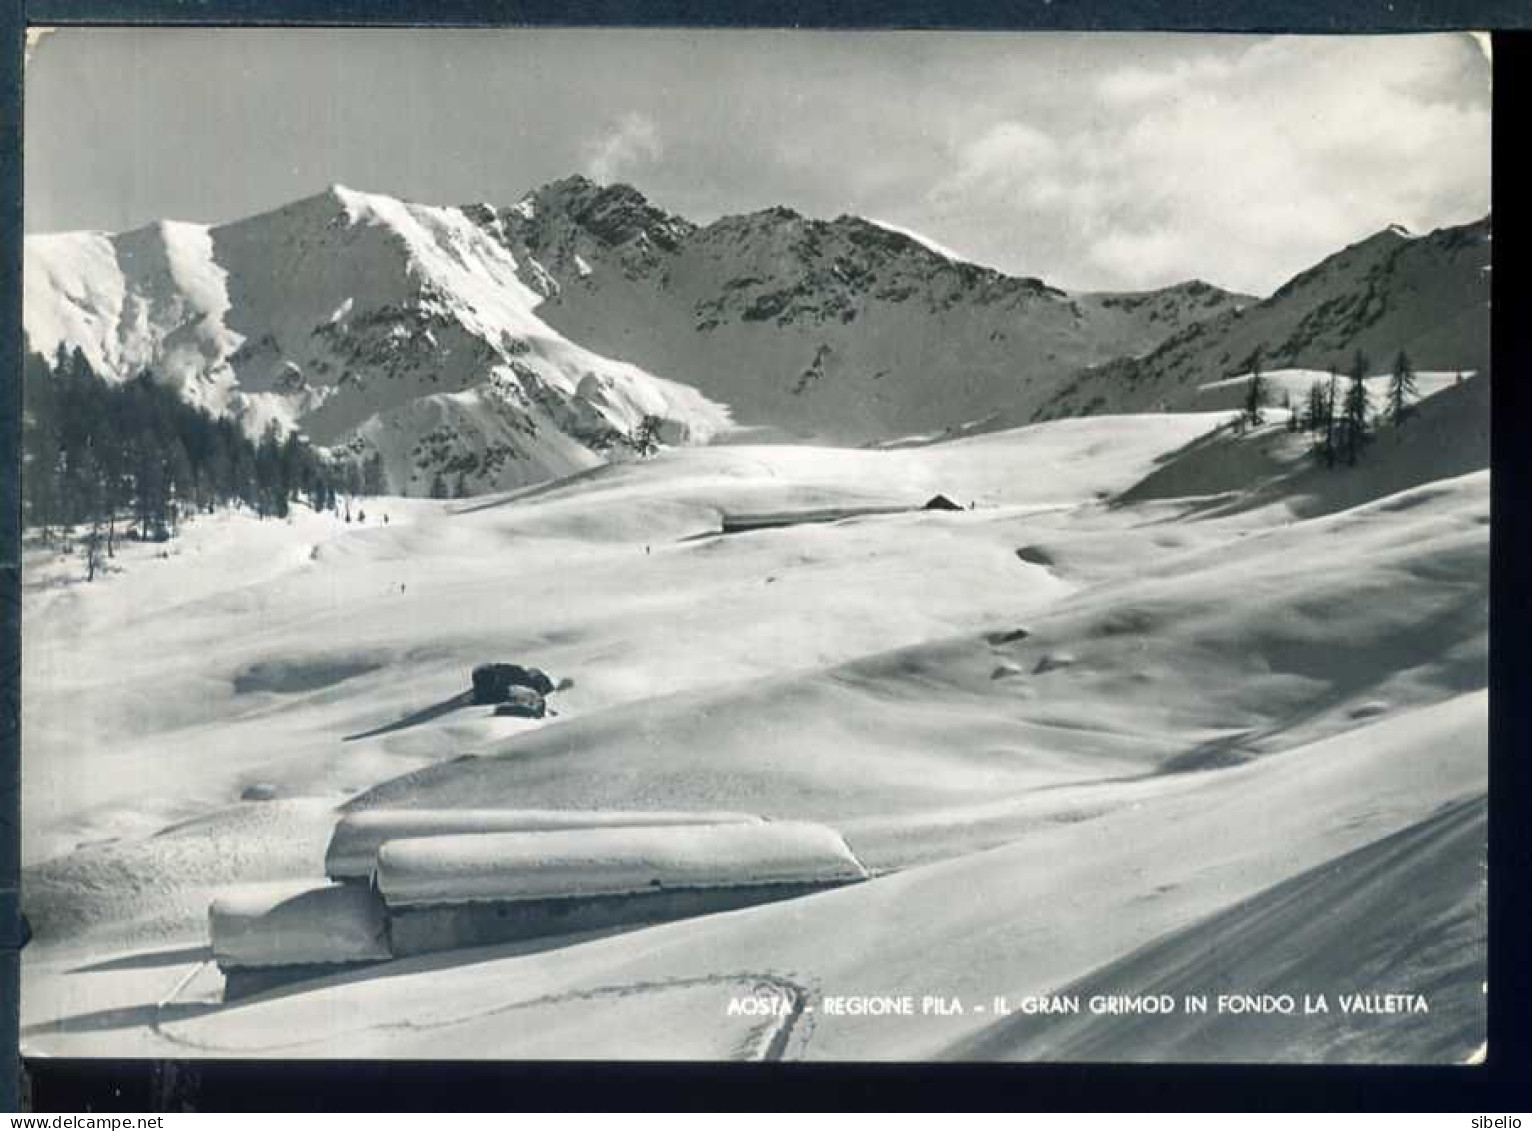 Valle d'Aosta - dieci cartoline semimoderne - rif. 1